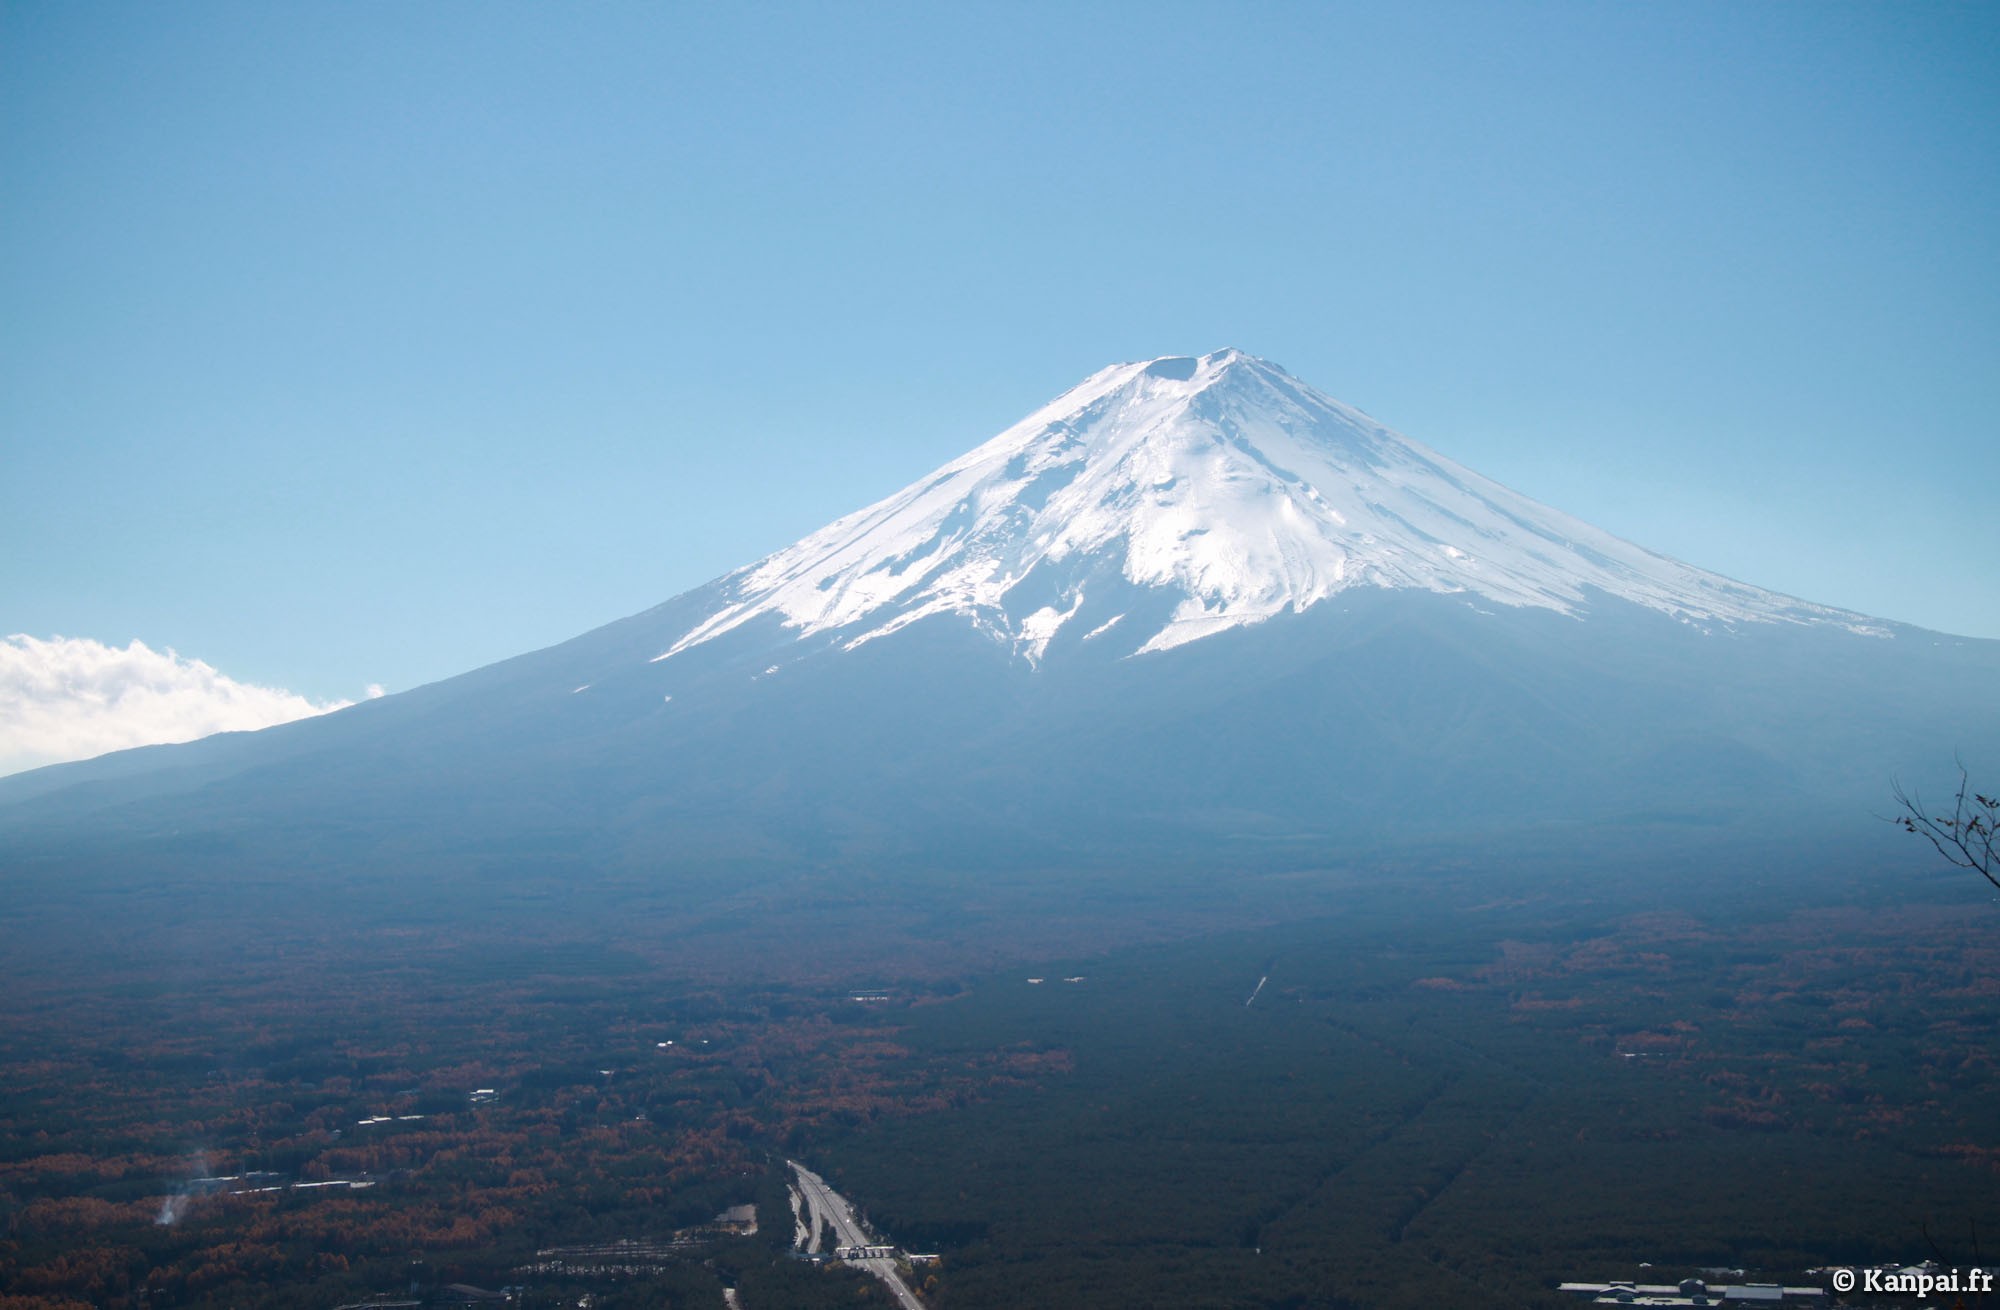 Mount Fuji - The iconic volcano